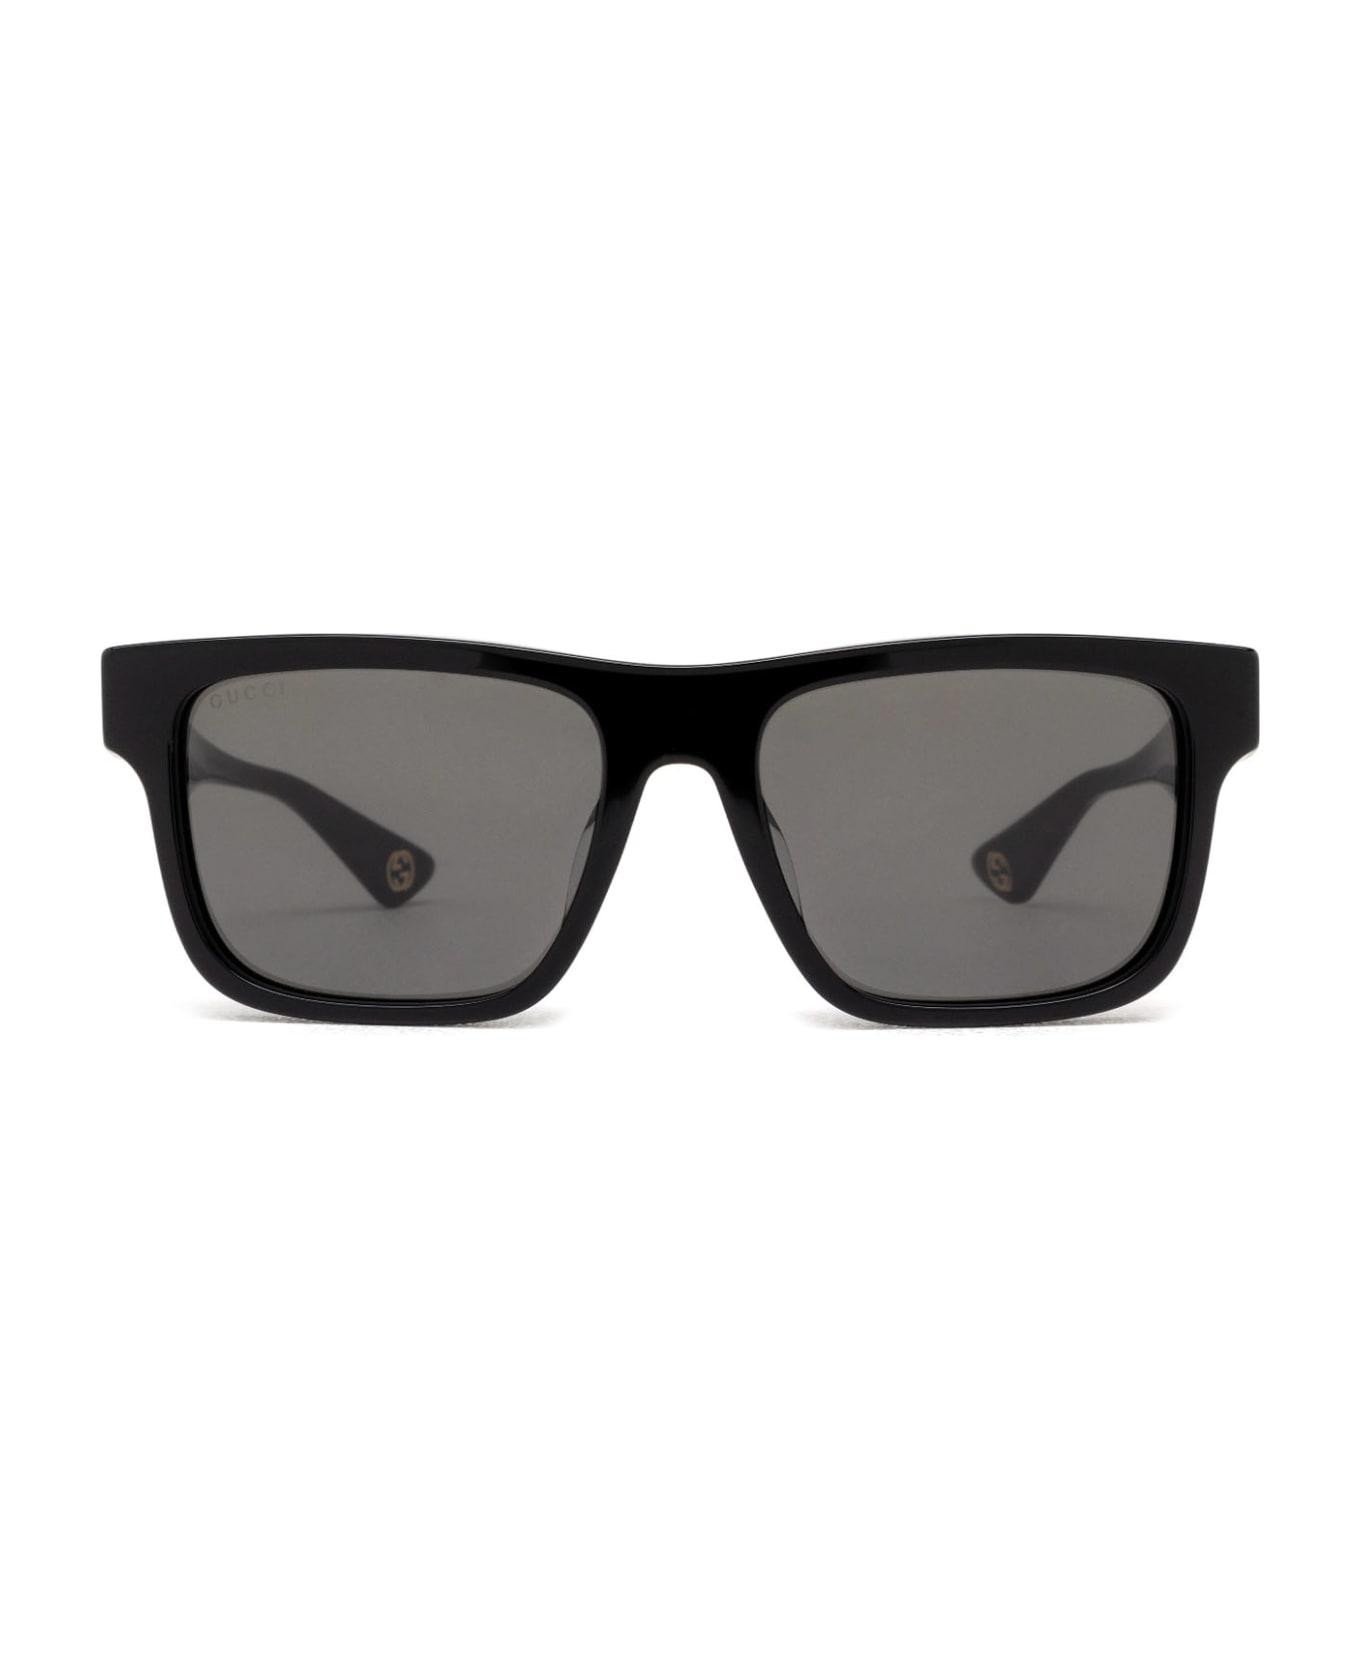 Gucci Eyewear Gg1618sa Black Sunglasses - Black